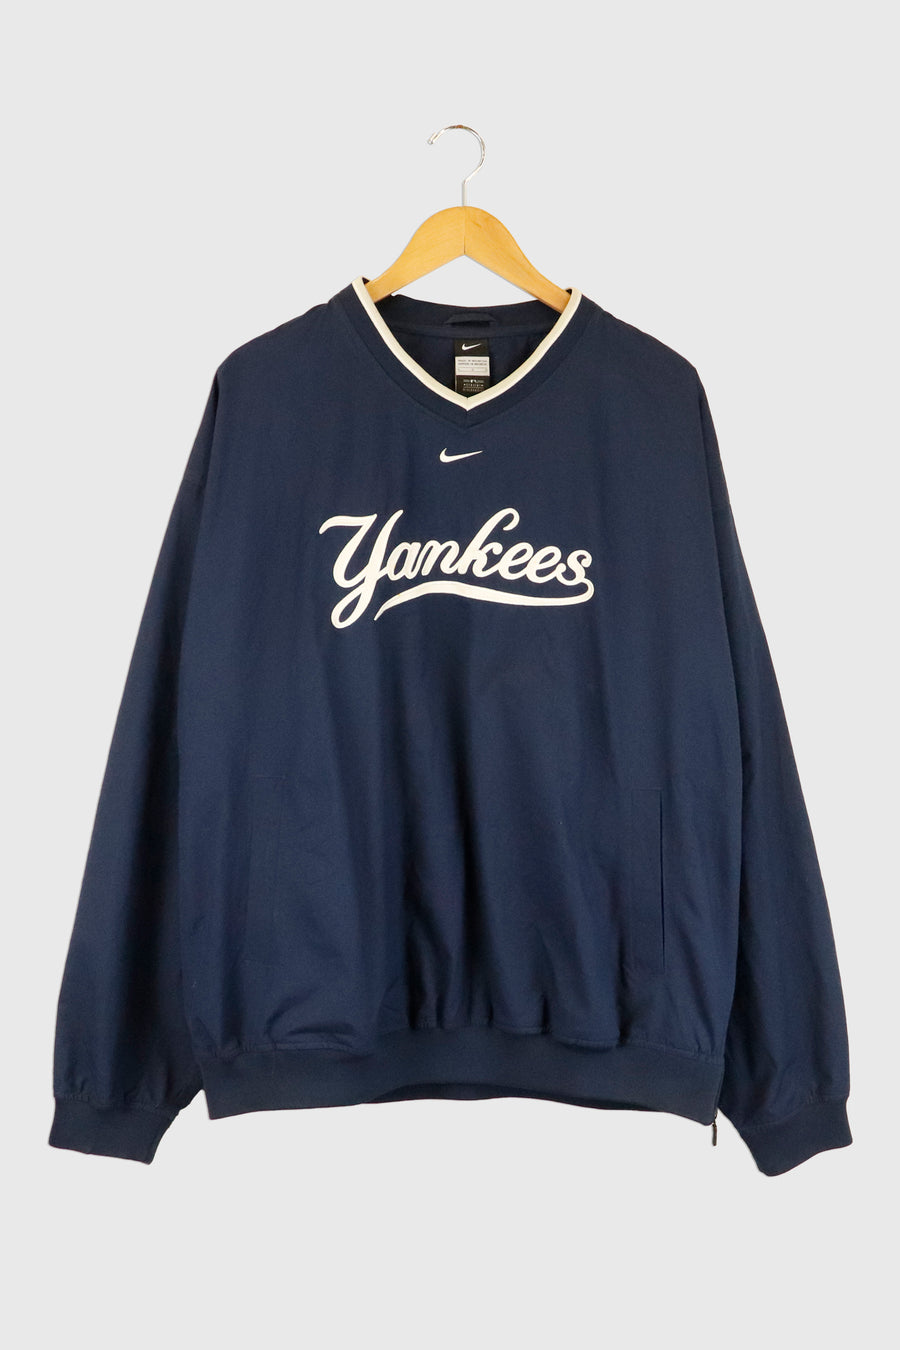 Vintage Yankees Sports Pullover Sz L